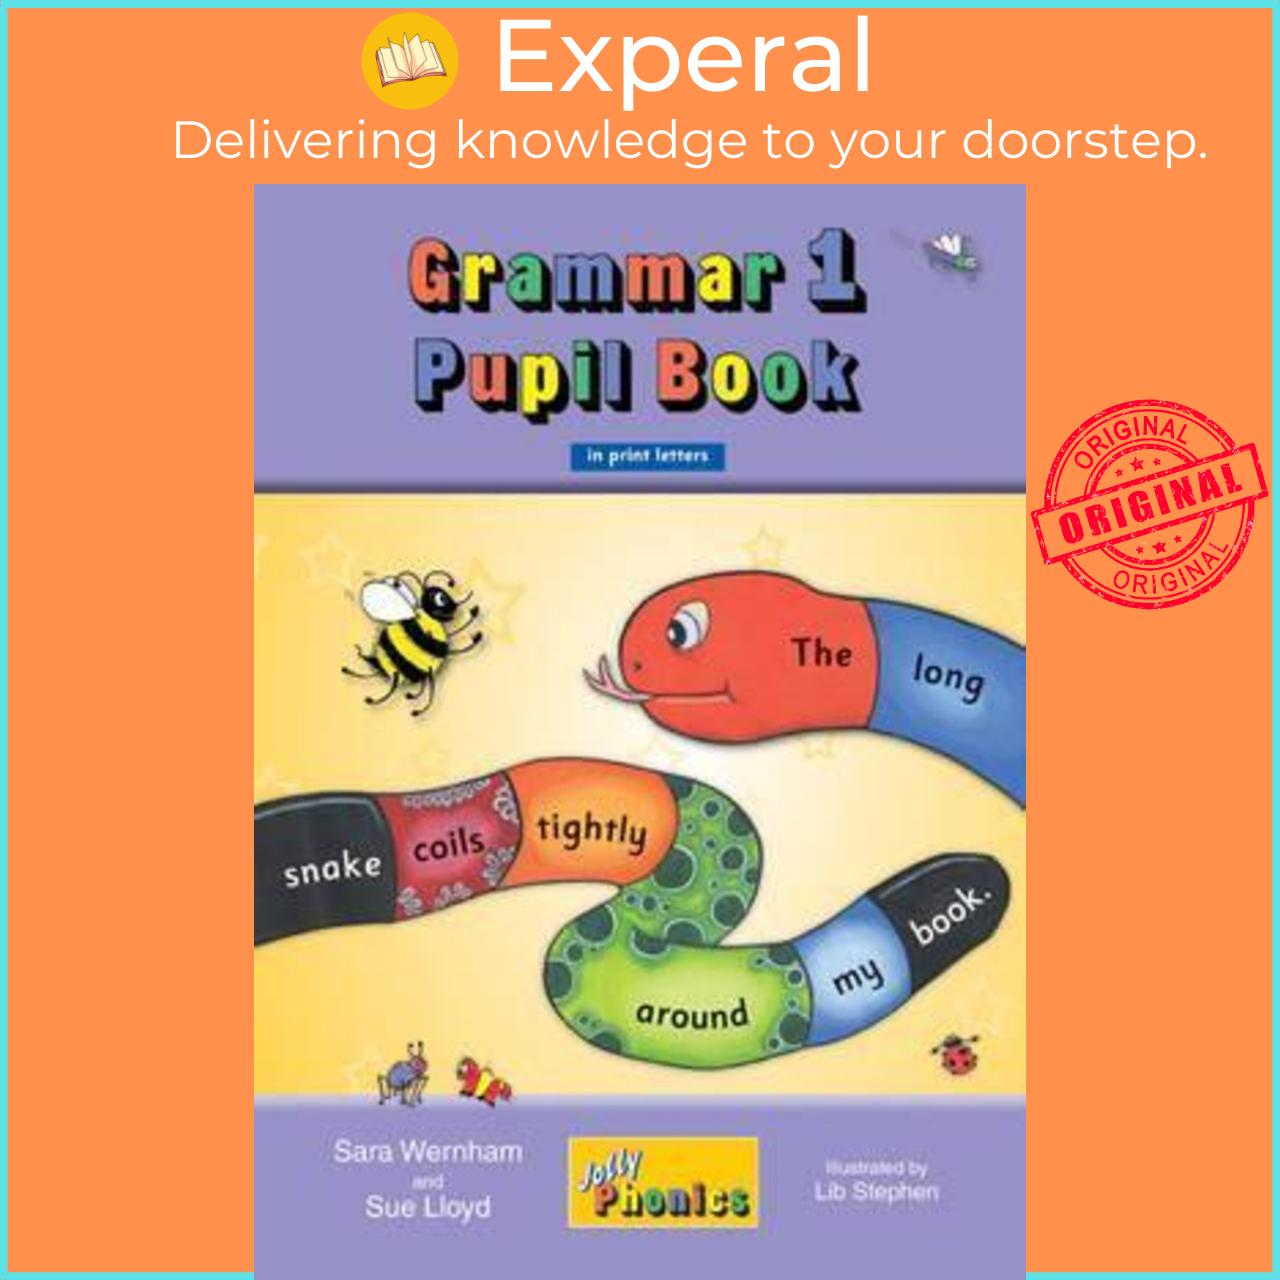 Sách - Grammar 1 Pupil Book : In Print Letters (British English edition) by Sara Wernham (UK edition, paperback)